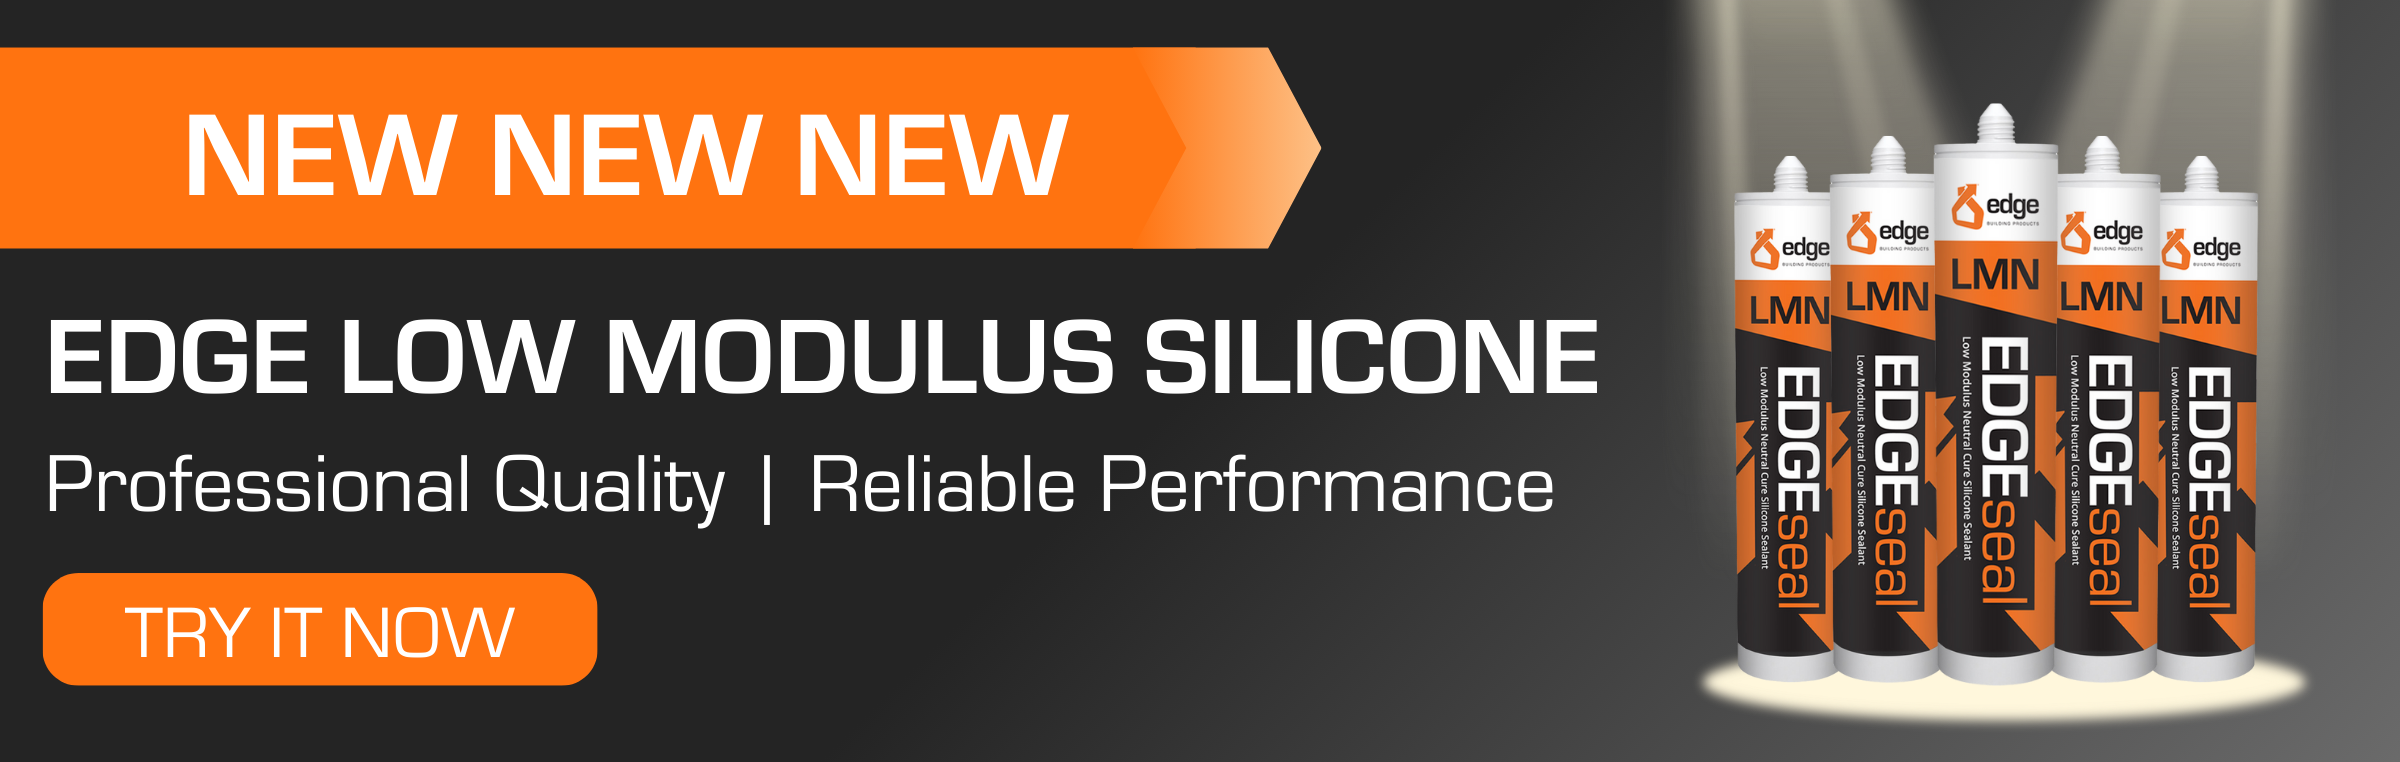 New! Edge low modulus silicone!